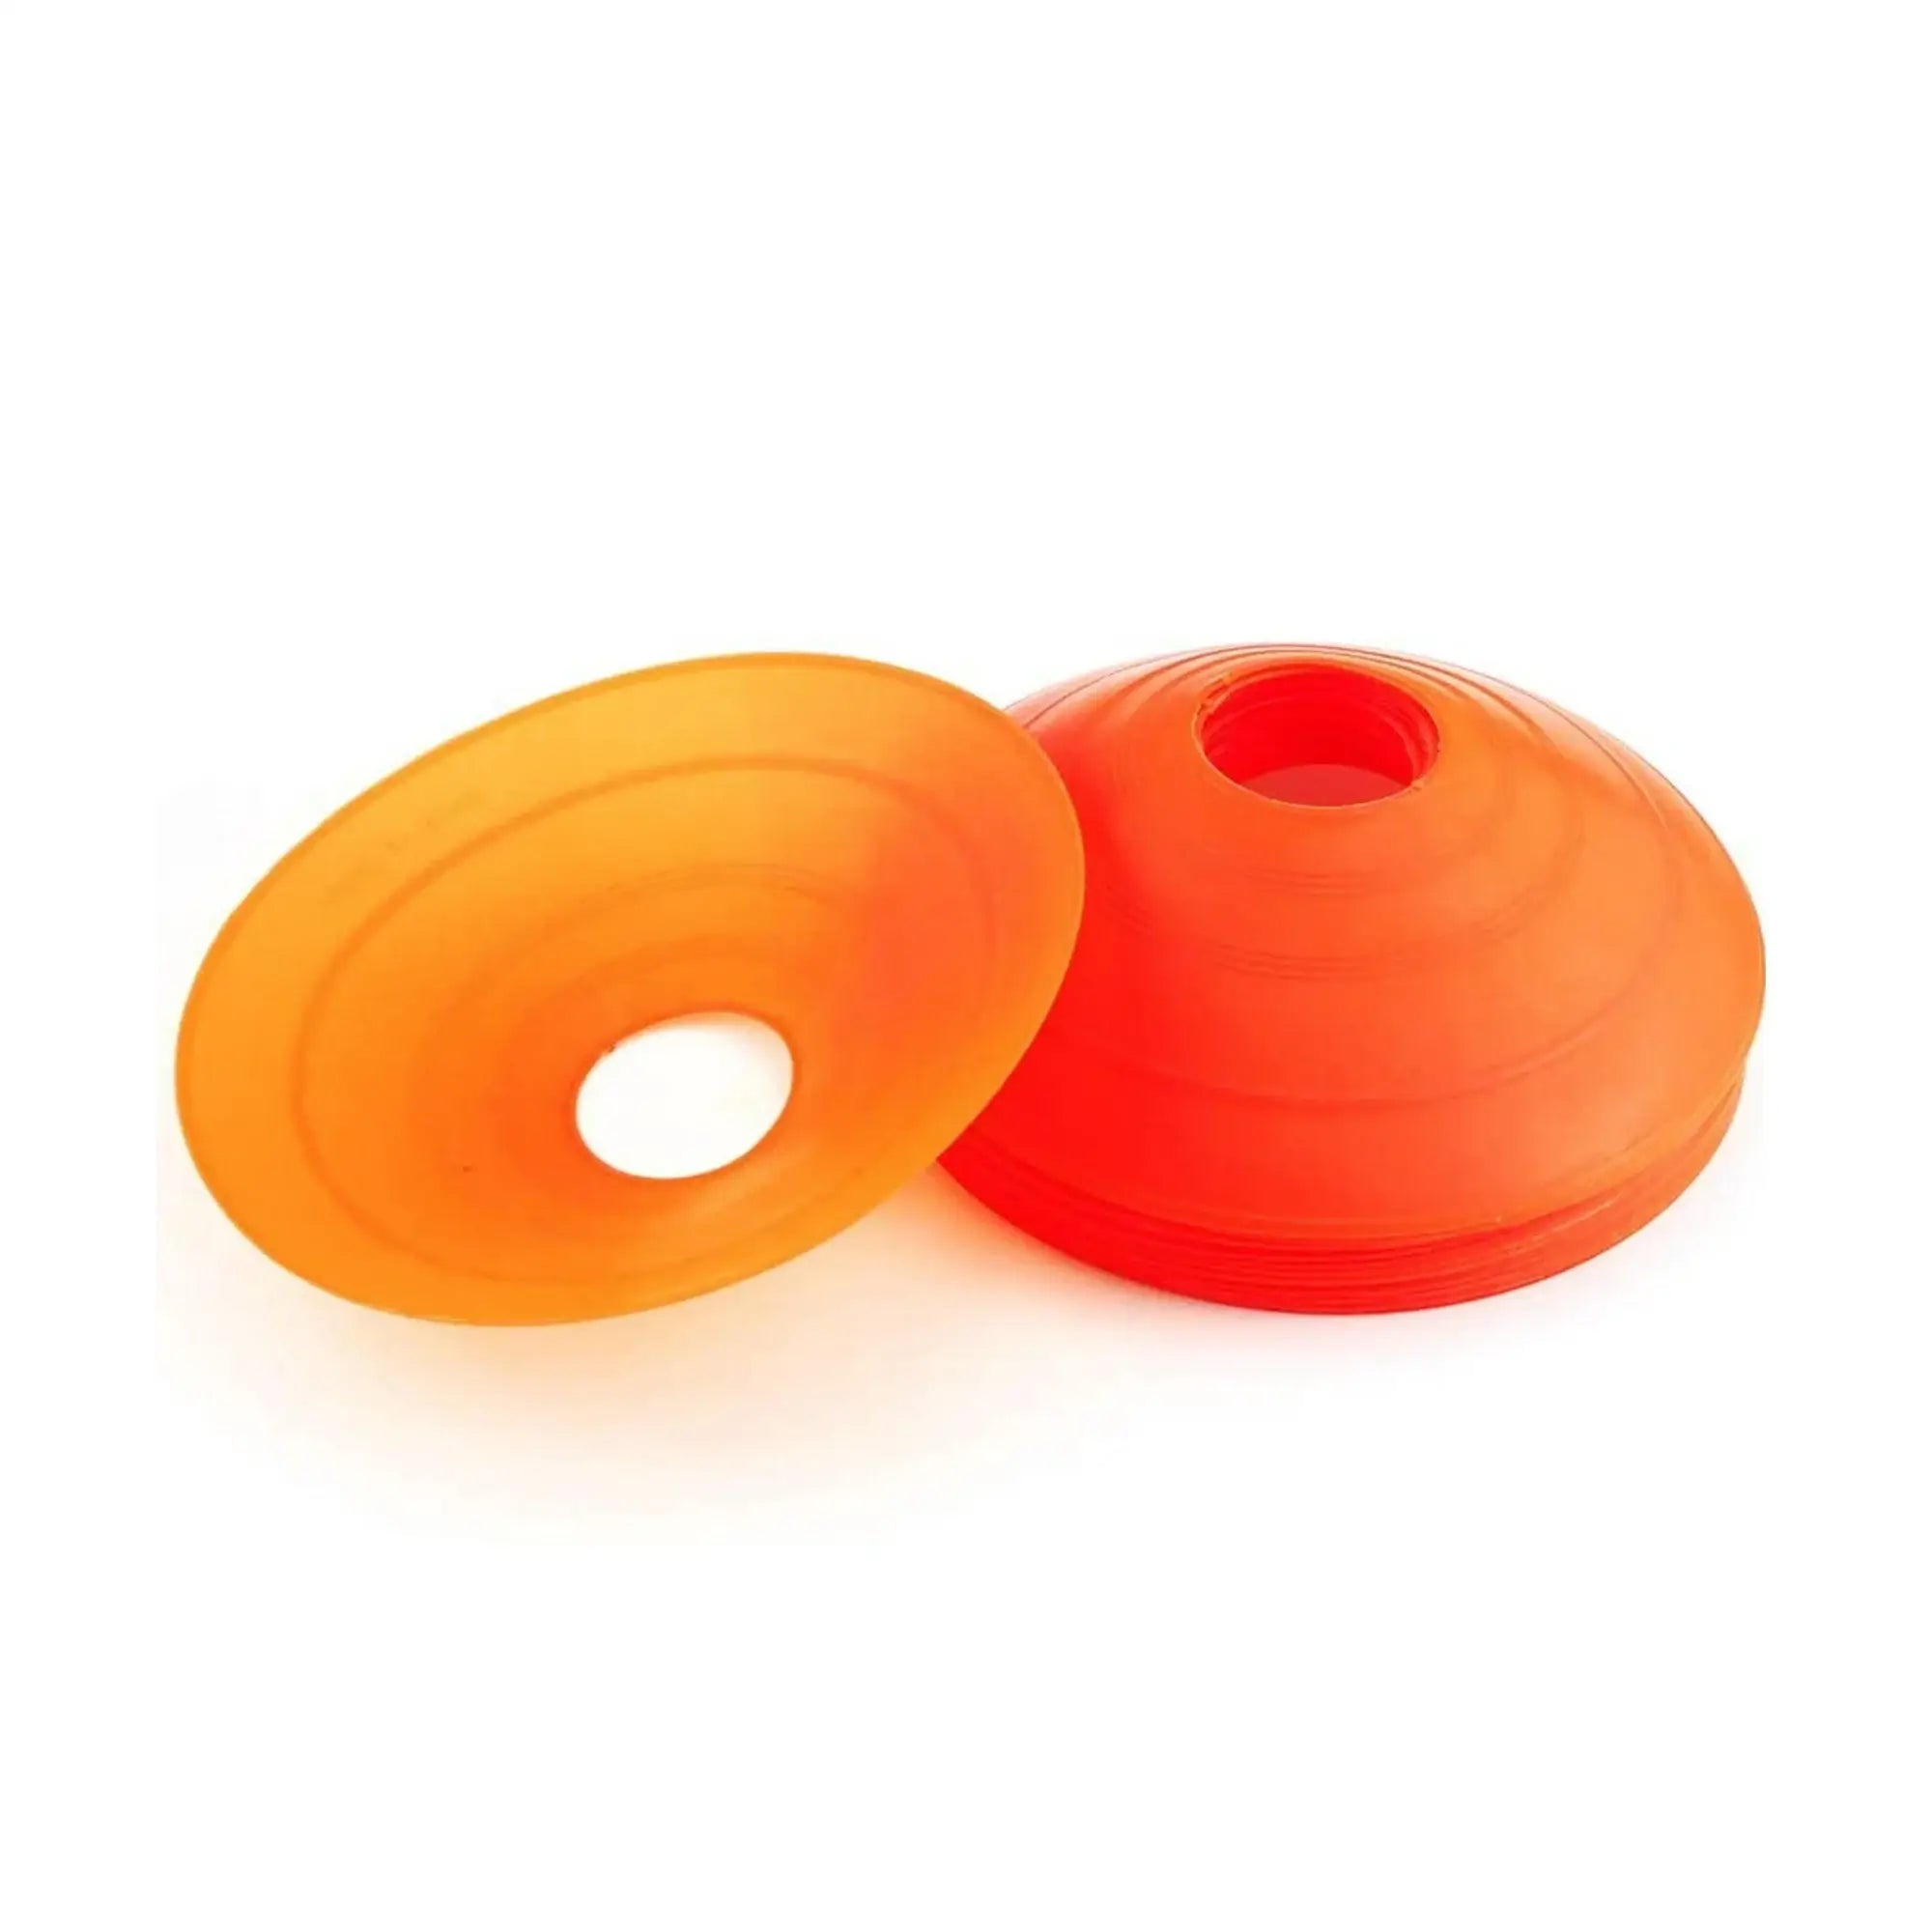 30 Yard Circle Cones Orange Low-Profile Track and Field Training Cones Plastic - Single Cone - MISCELLANEOUS ITEMS